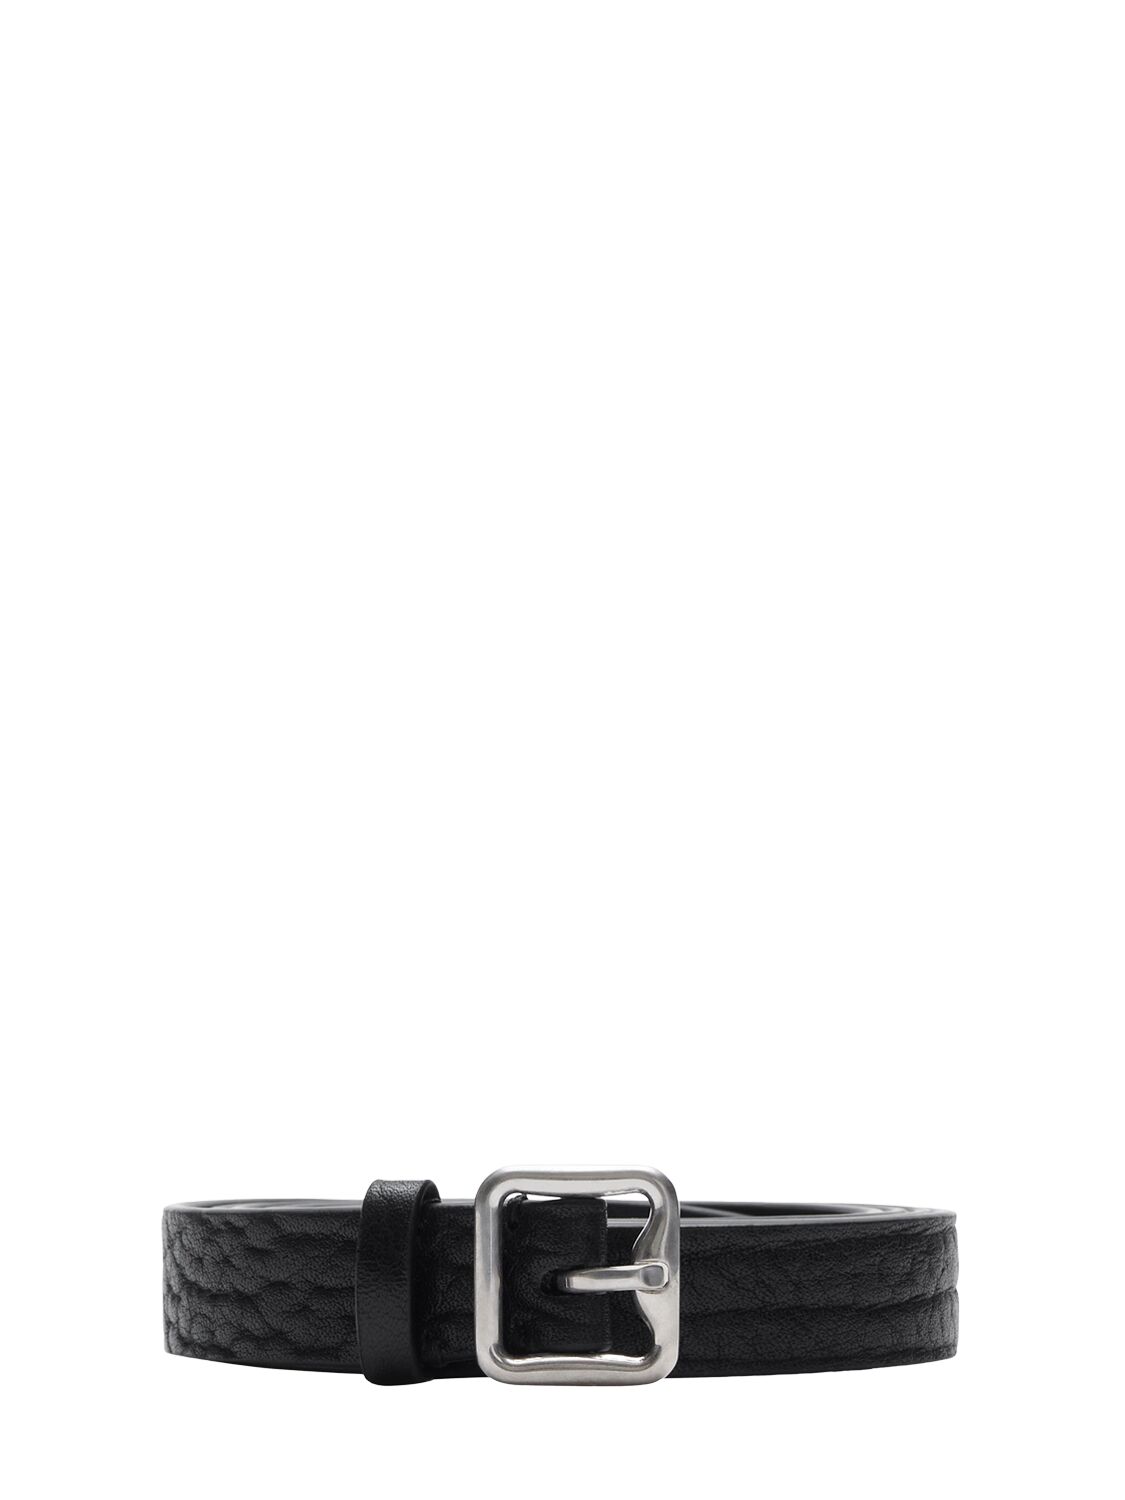 Image of 15mm Lb B Buckle Leather Belt